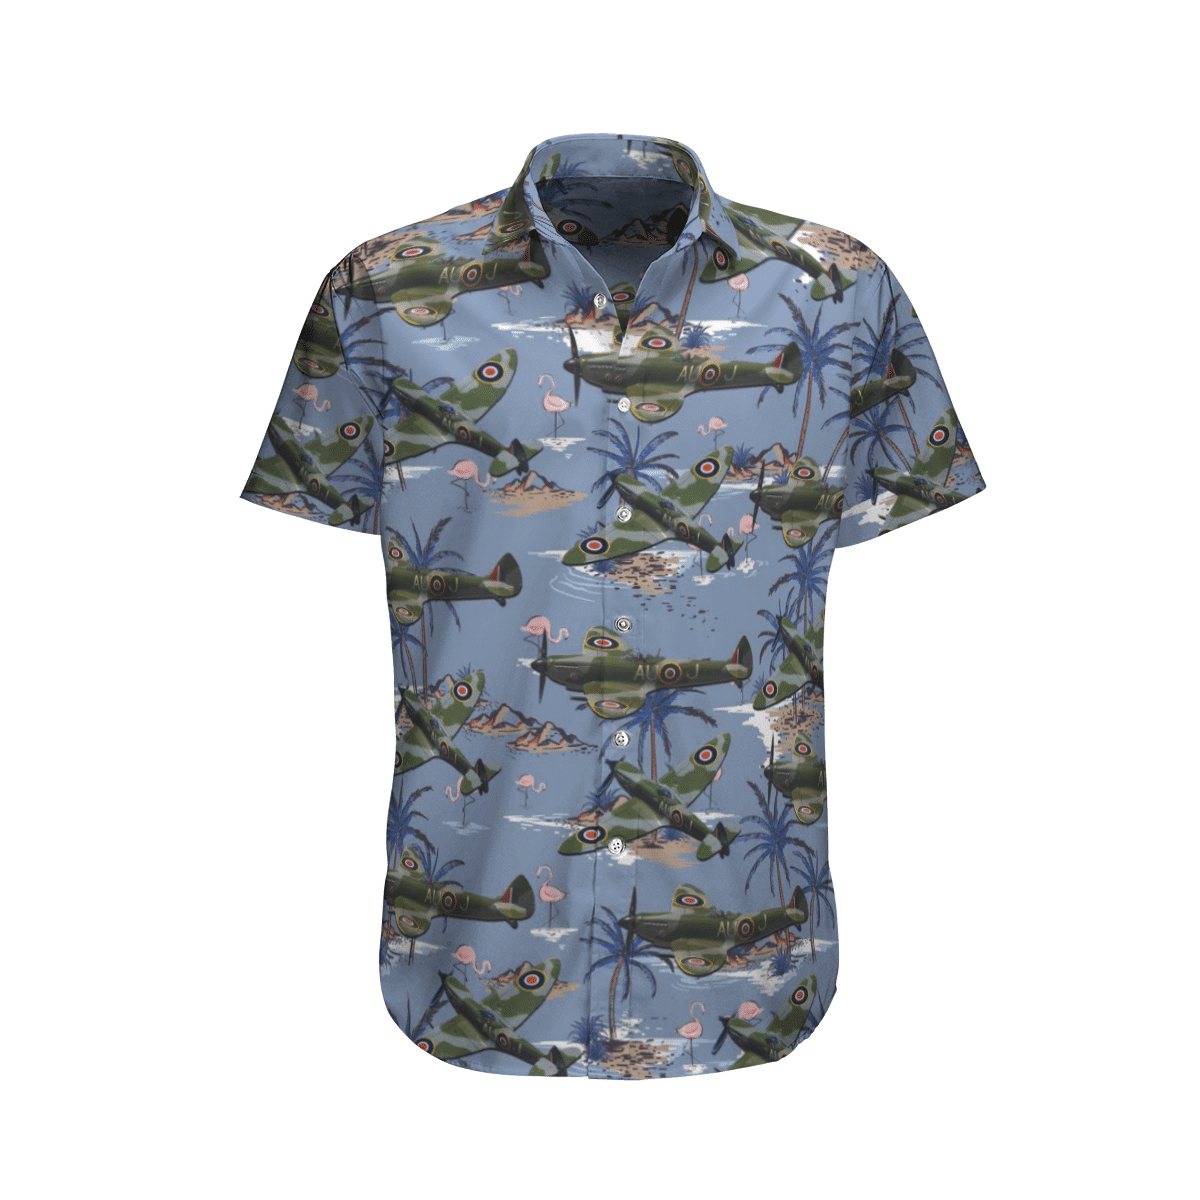 Get a new Hawaiian shirt to enjoy summer vacation 73